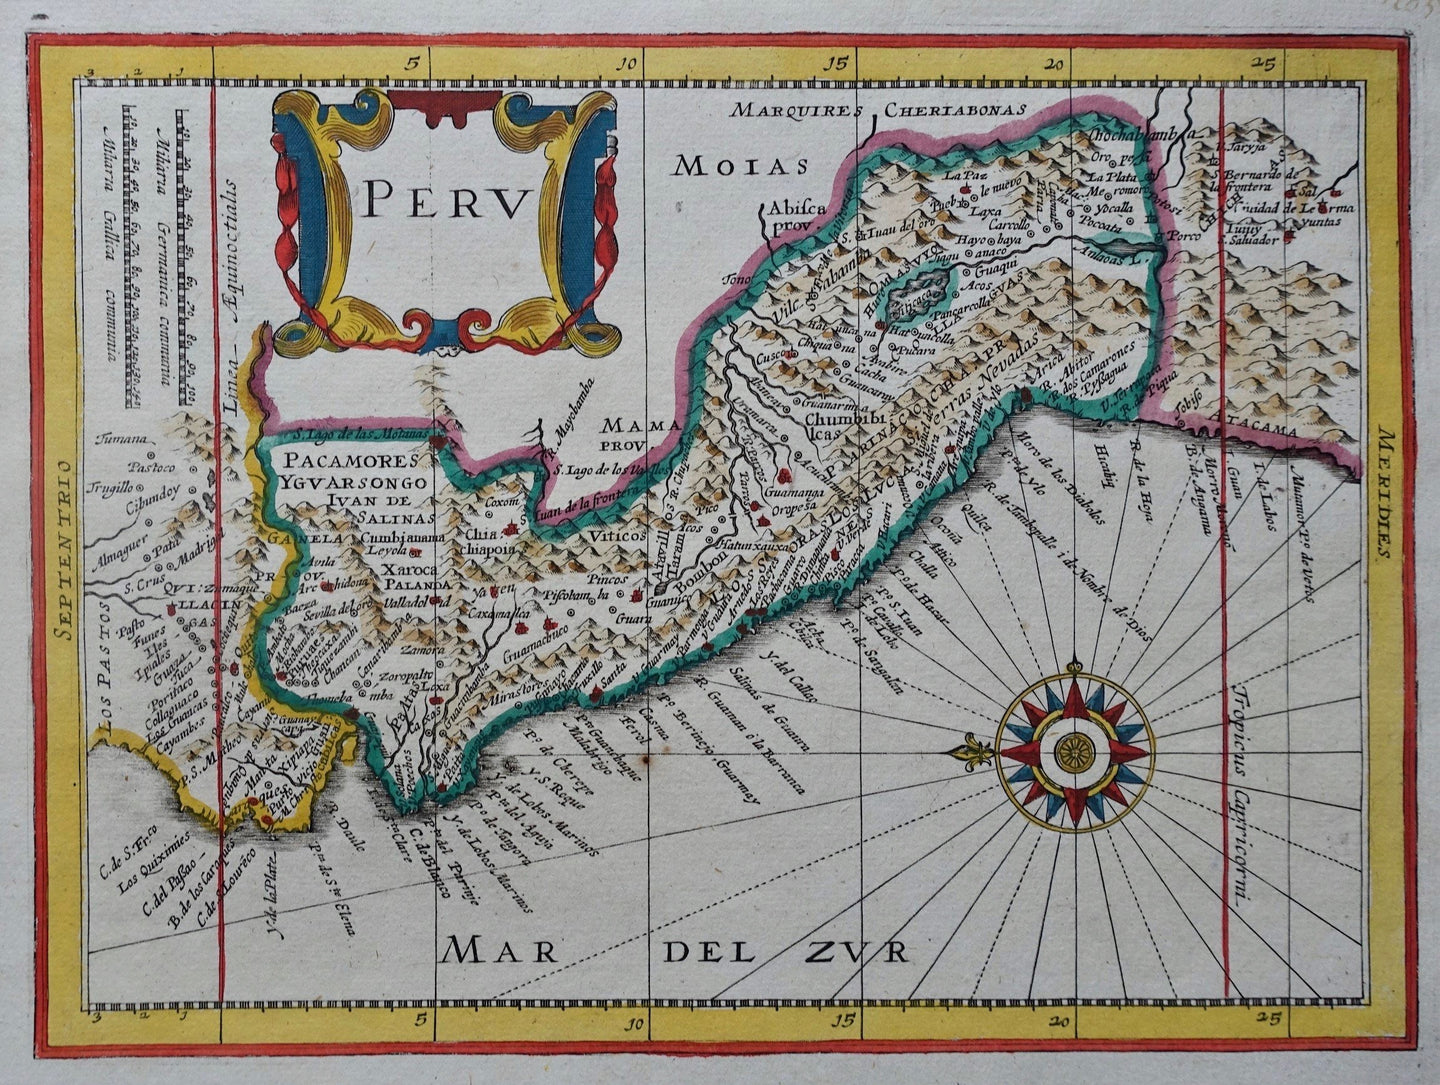 Peru - J Janssonius van Waesbergen - 1676